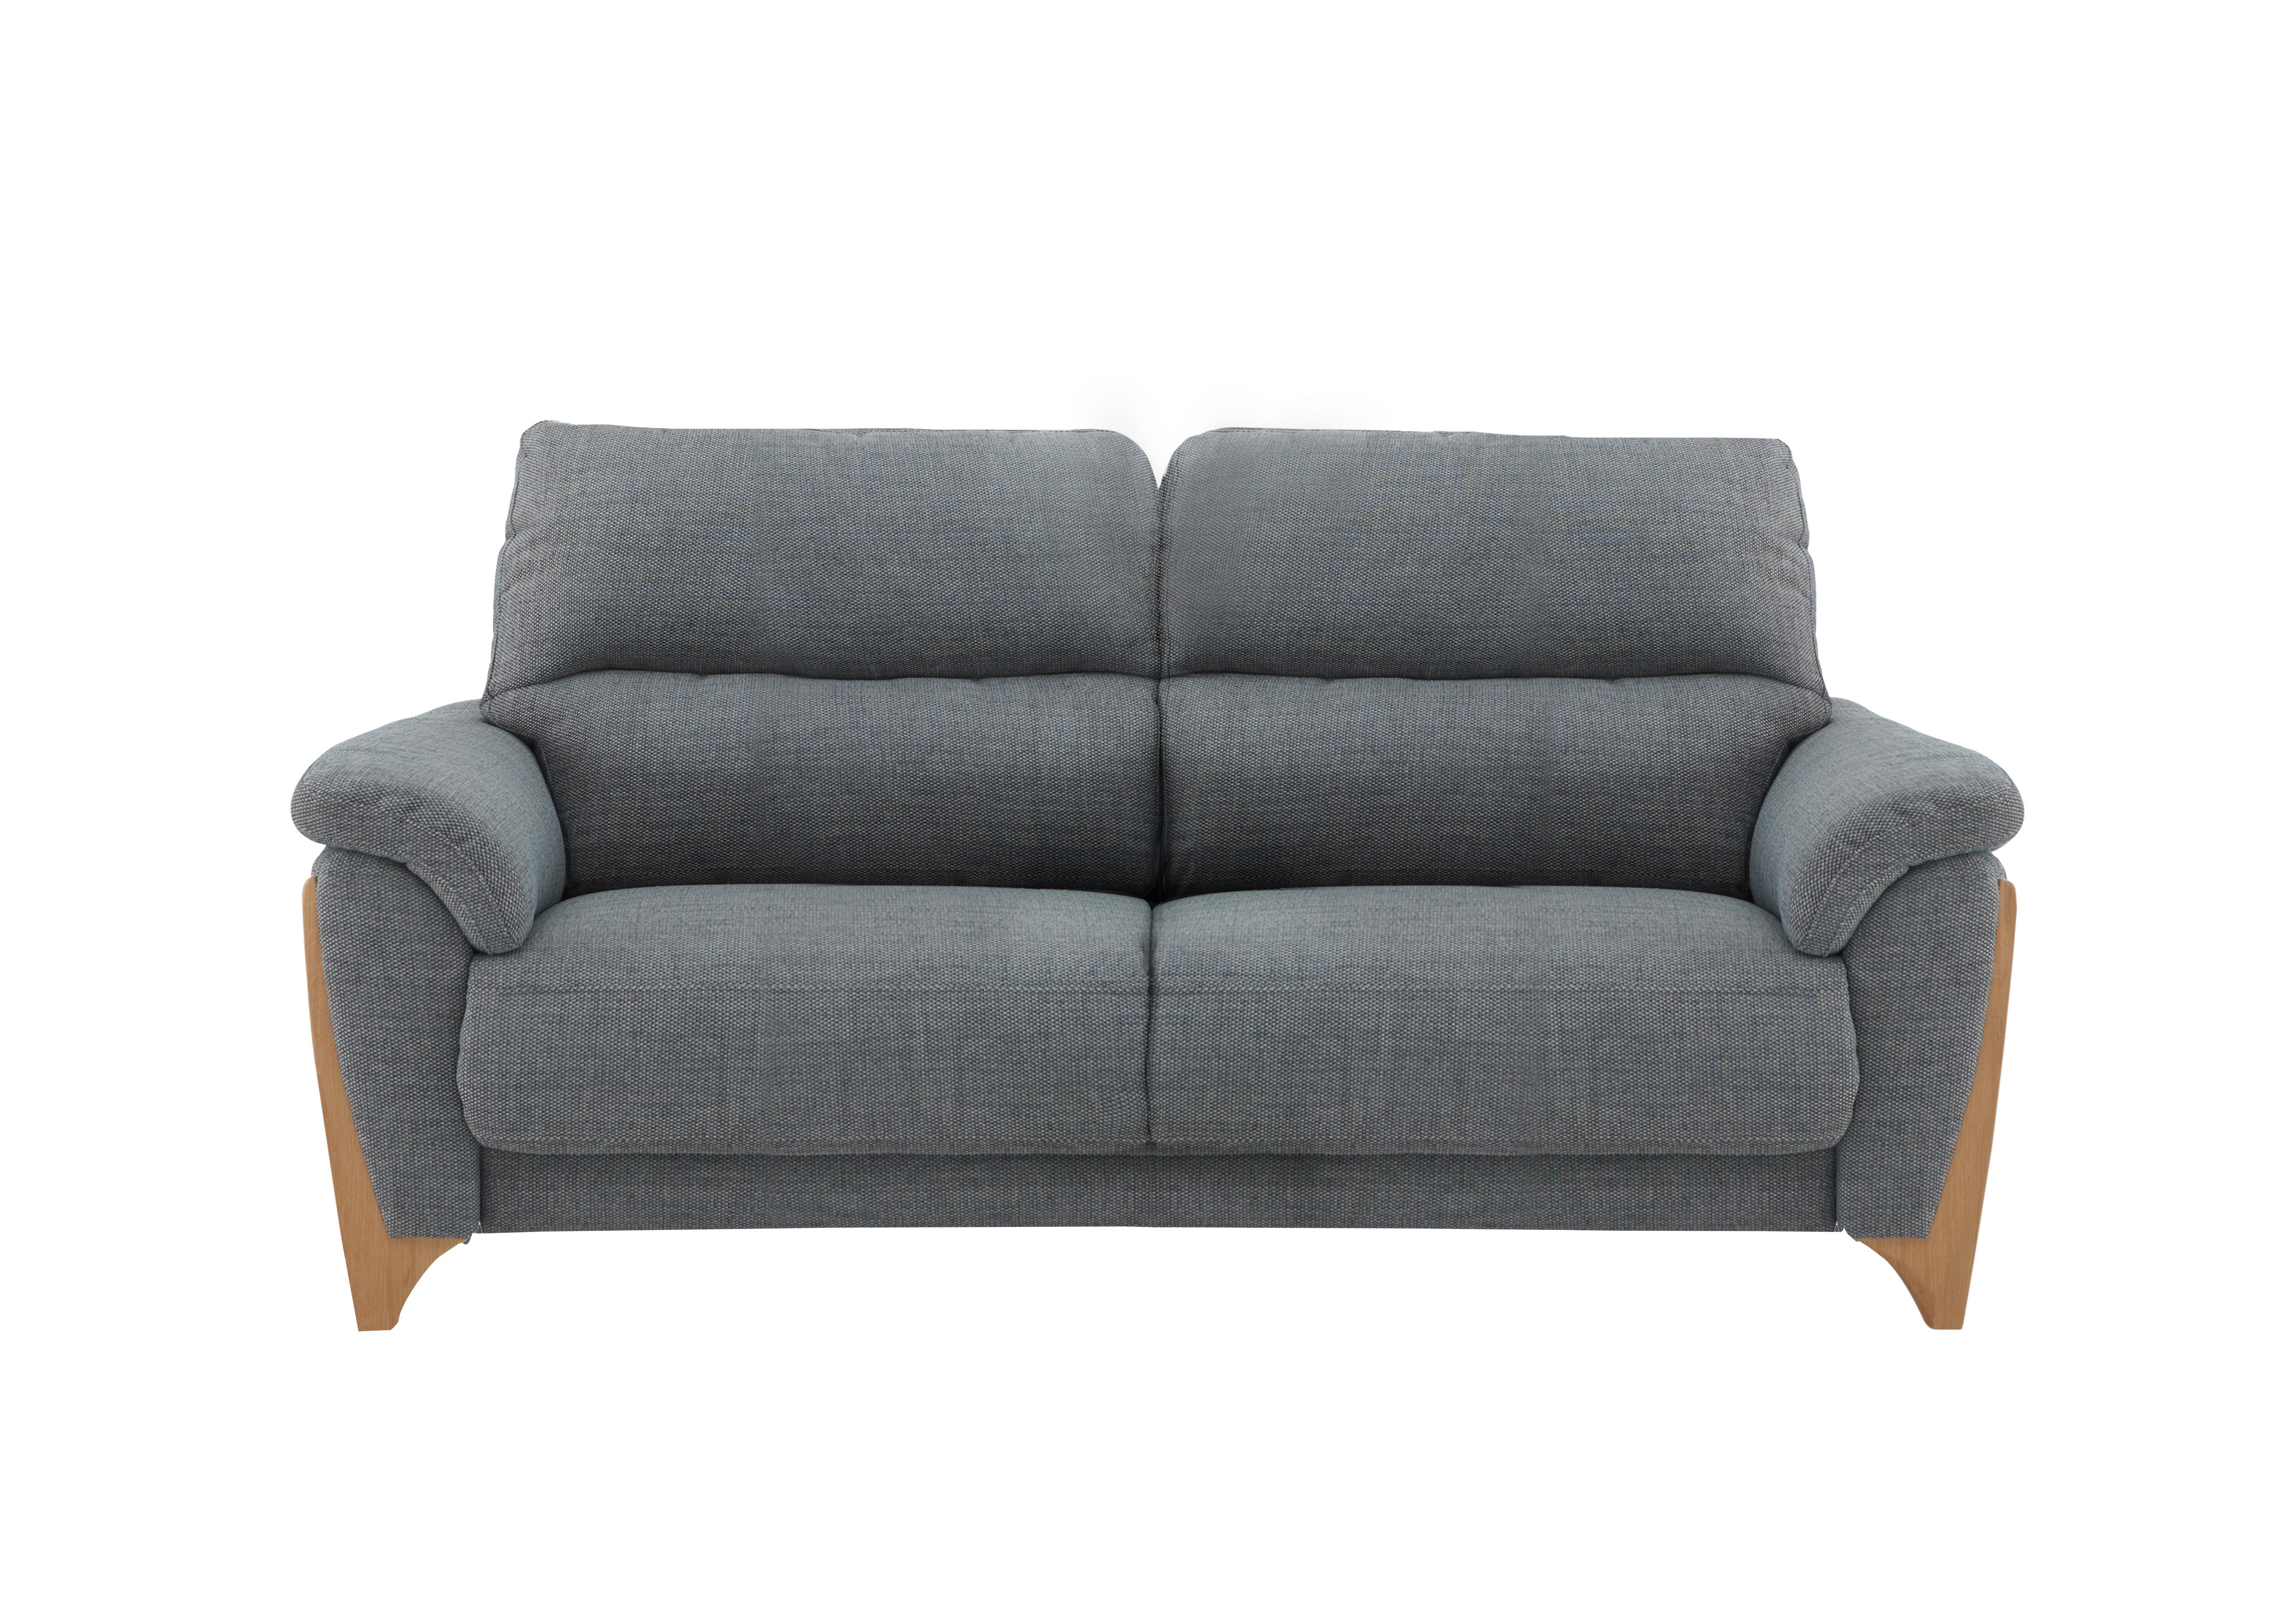 Enna Large Fabric Sofa in P222 on Furniture Village